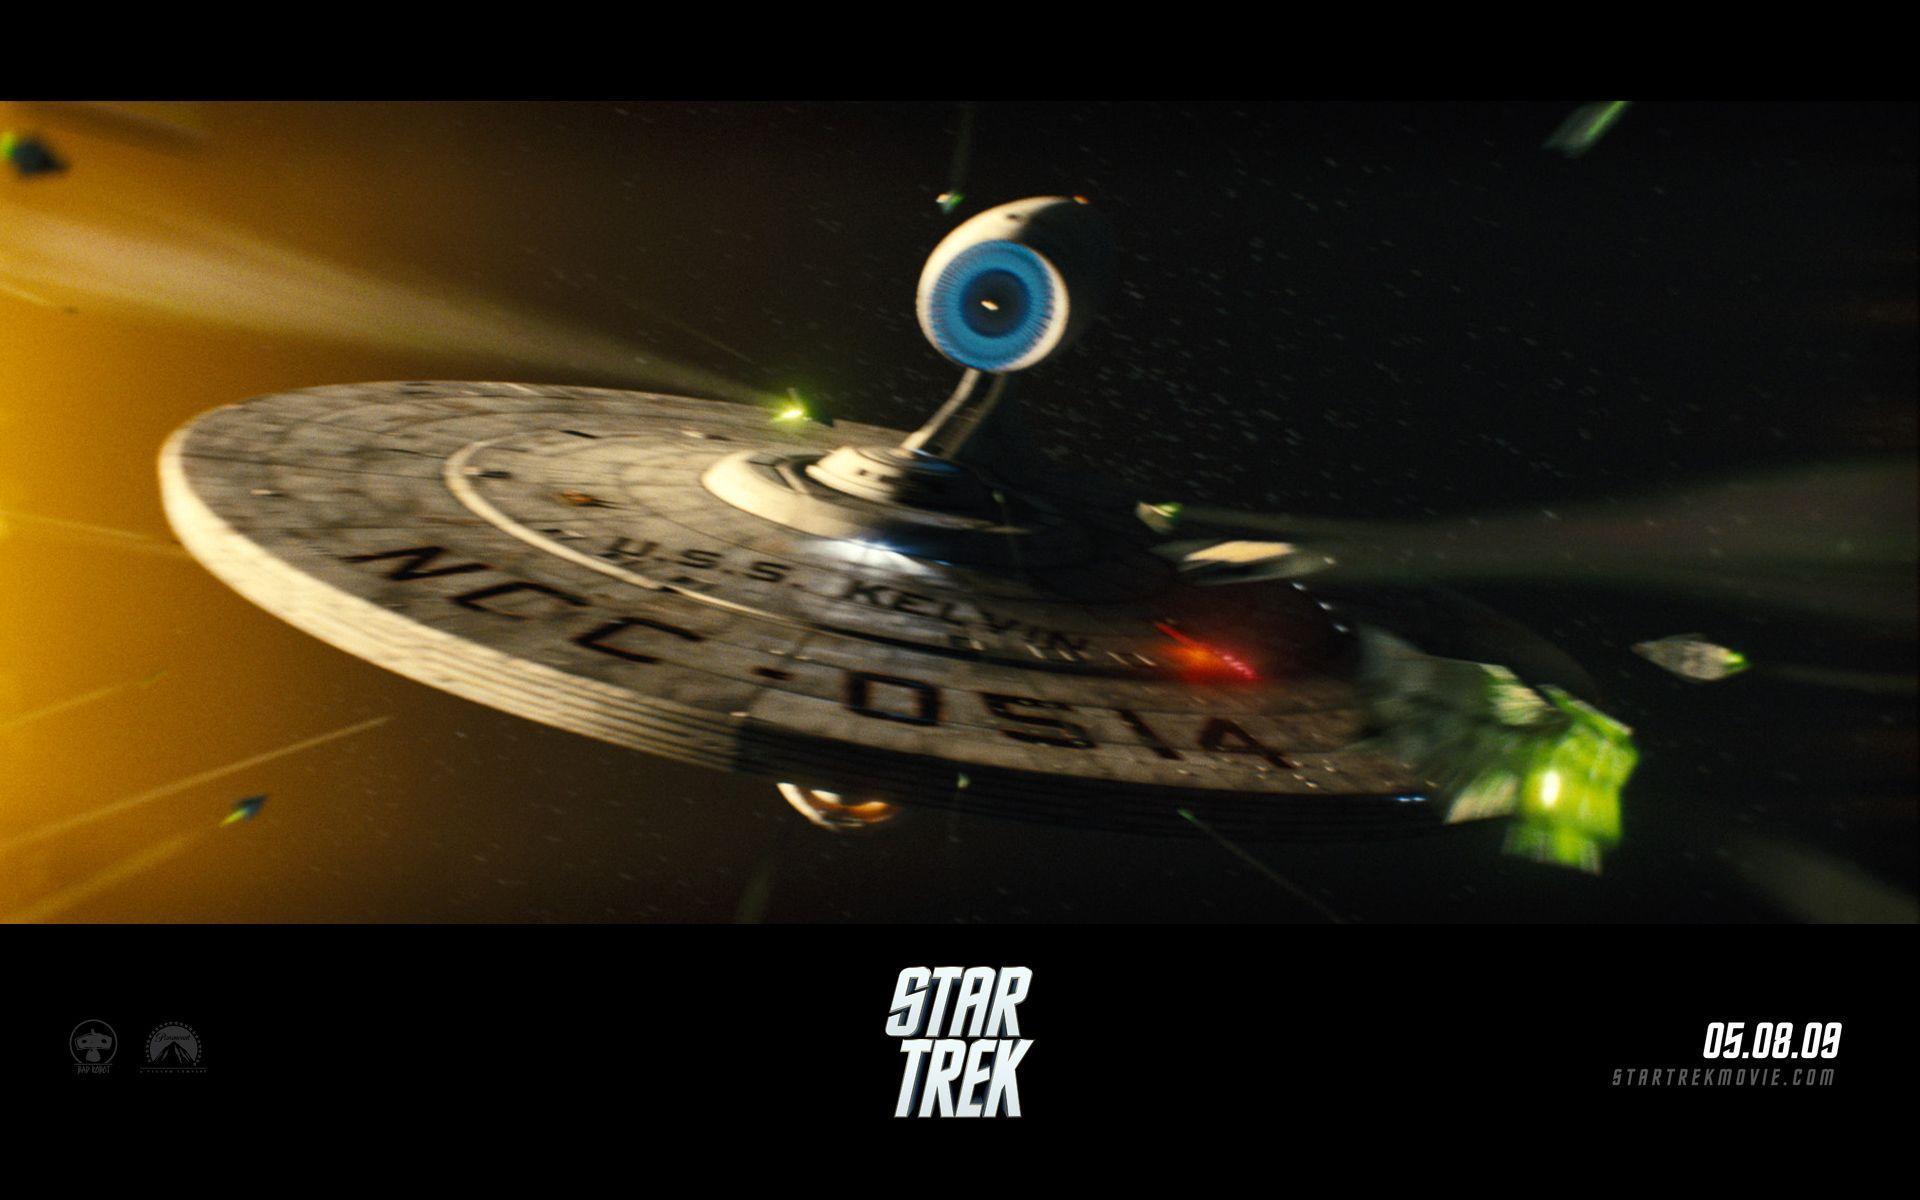 Fondos de pantalla de Star Trek. Wallpaper de Star Trek. Fondos